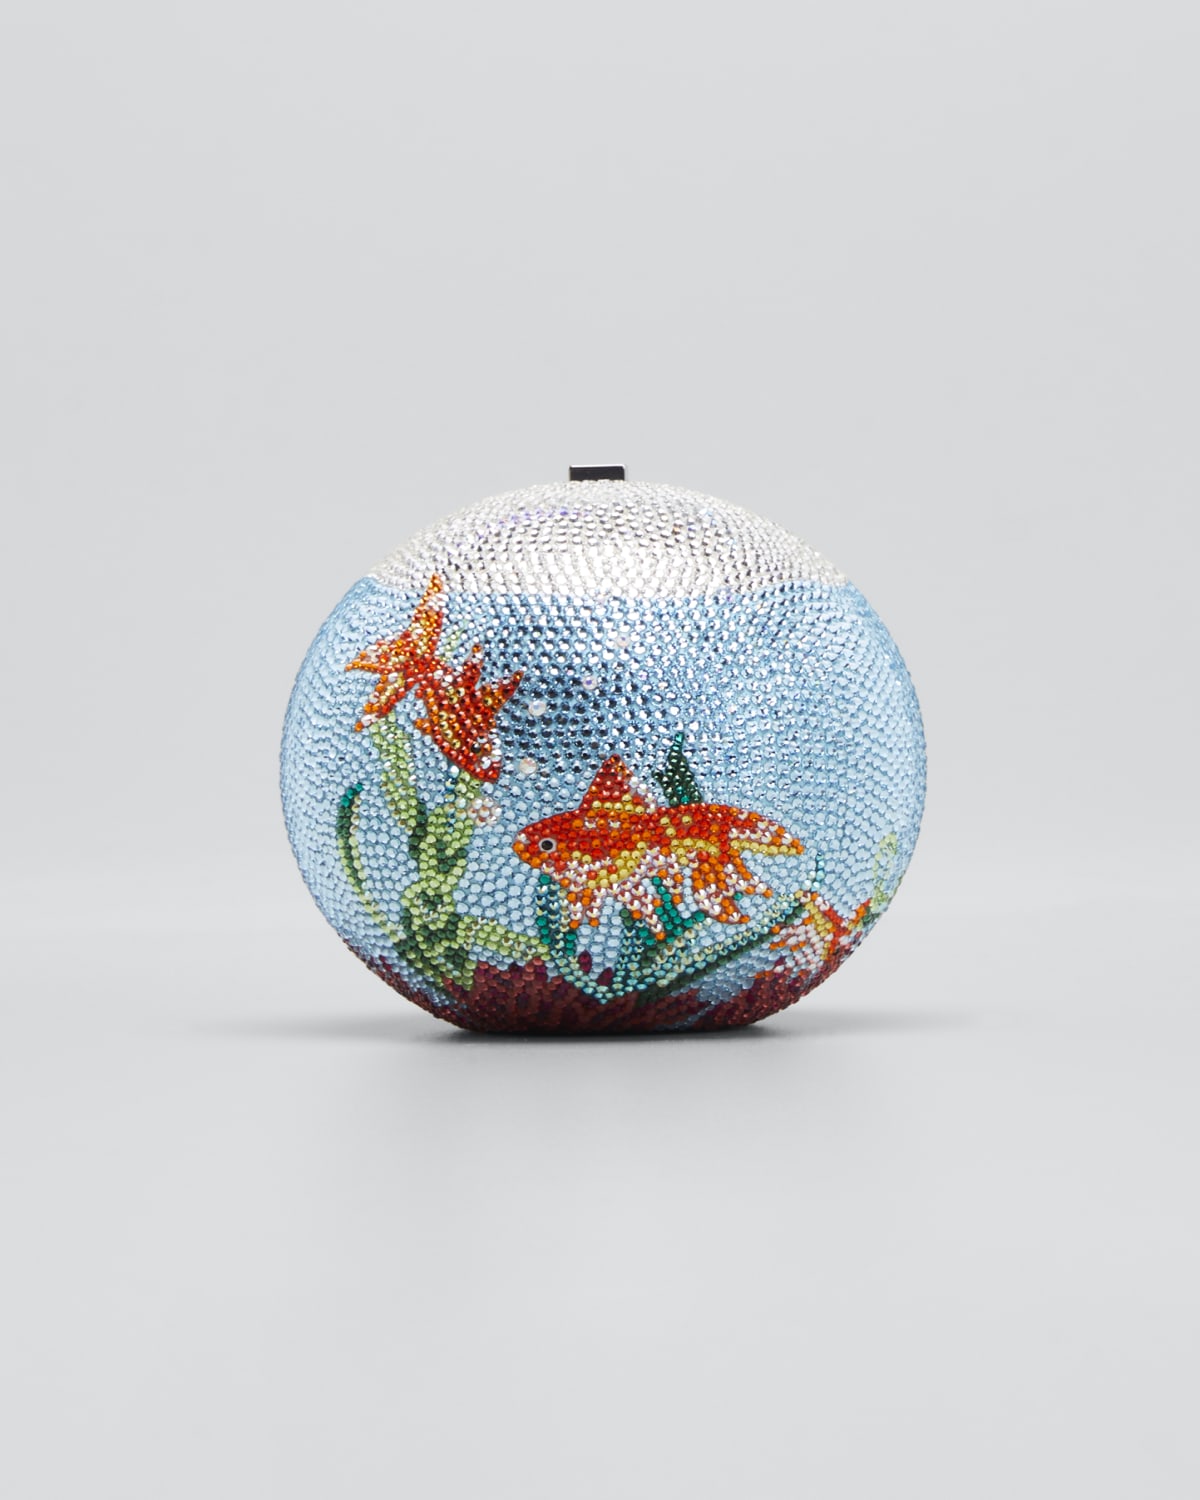 JUDITH LEIBER, Sphere Goldfish Bowl Clutch Bag, Women